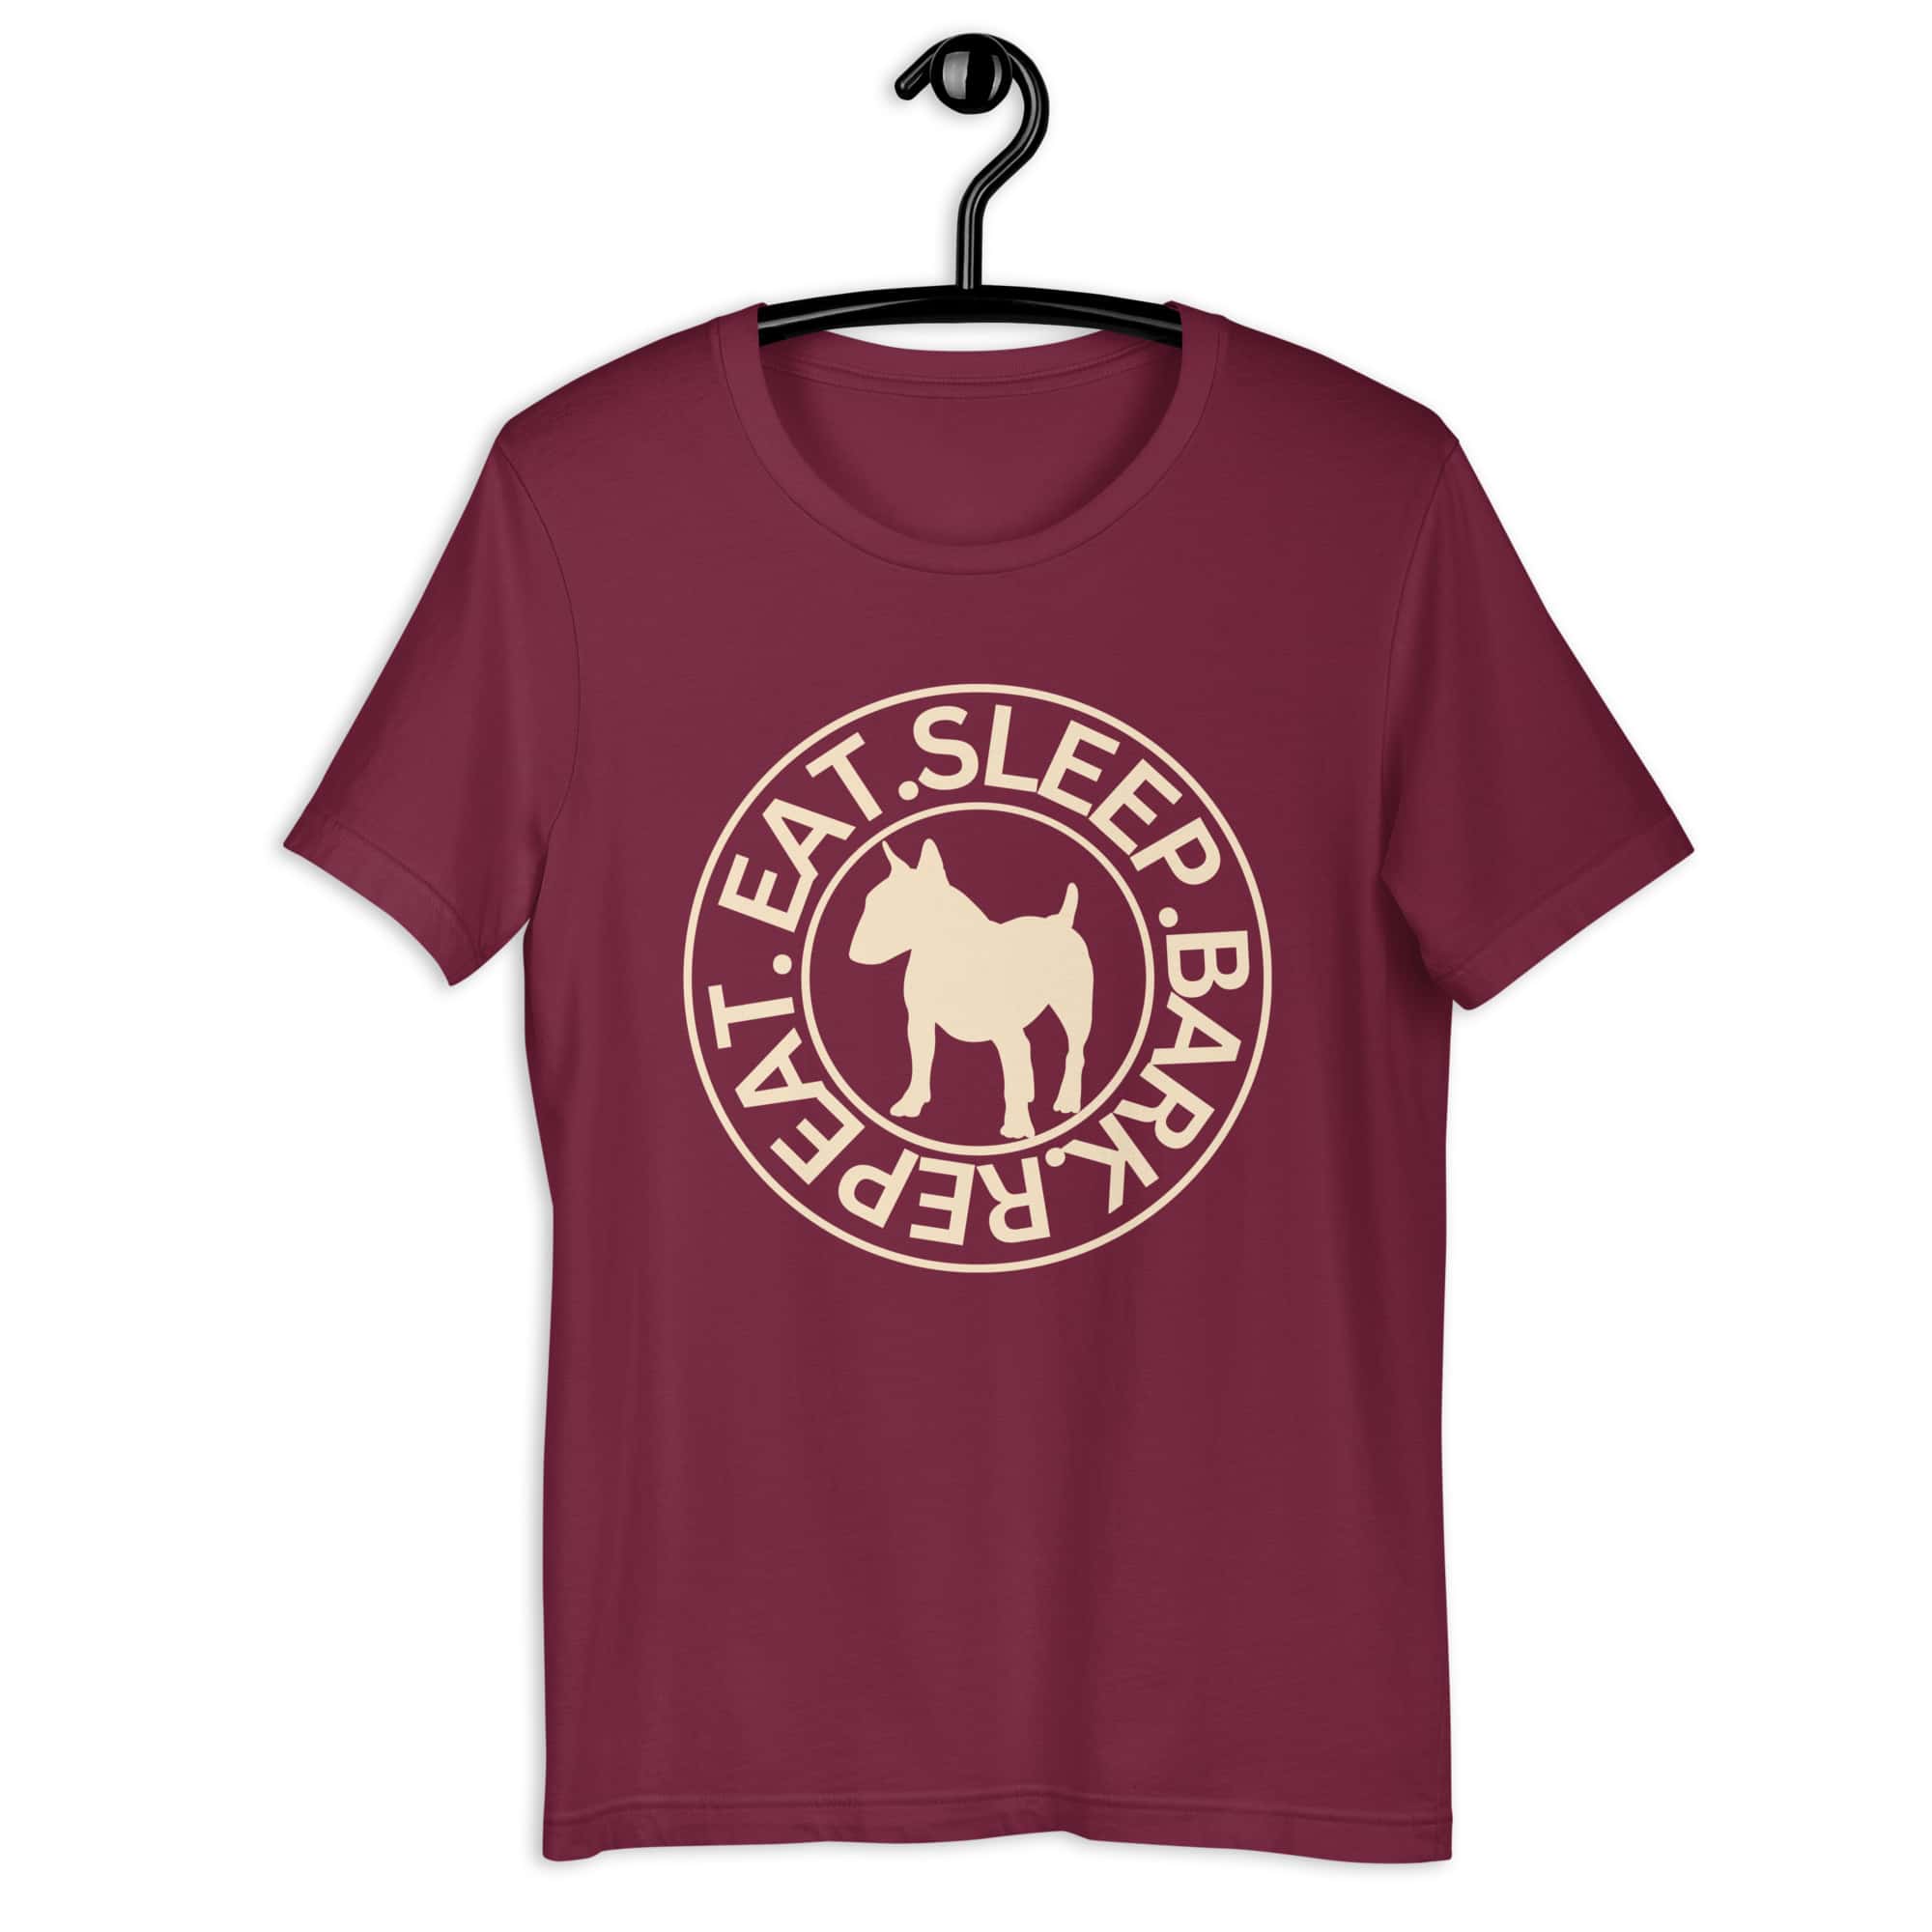 Eat Sleep Bark Repeat Bull Terrier Unisex T-Shirt. Maroon